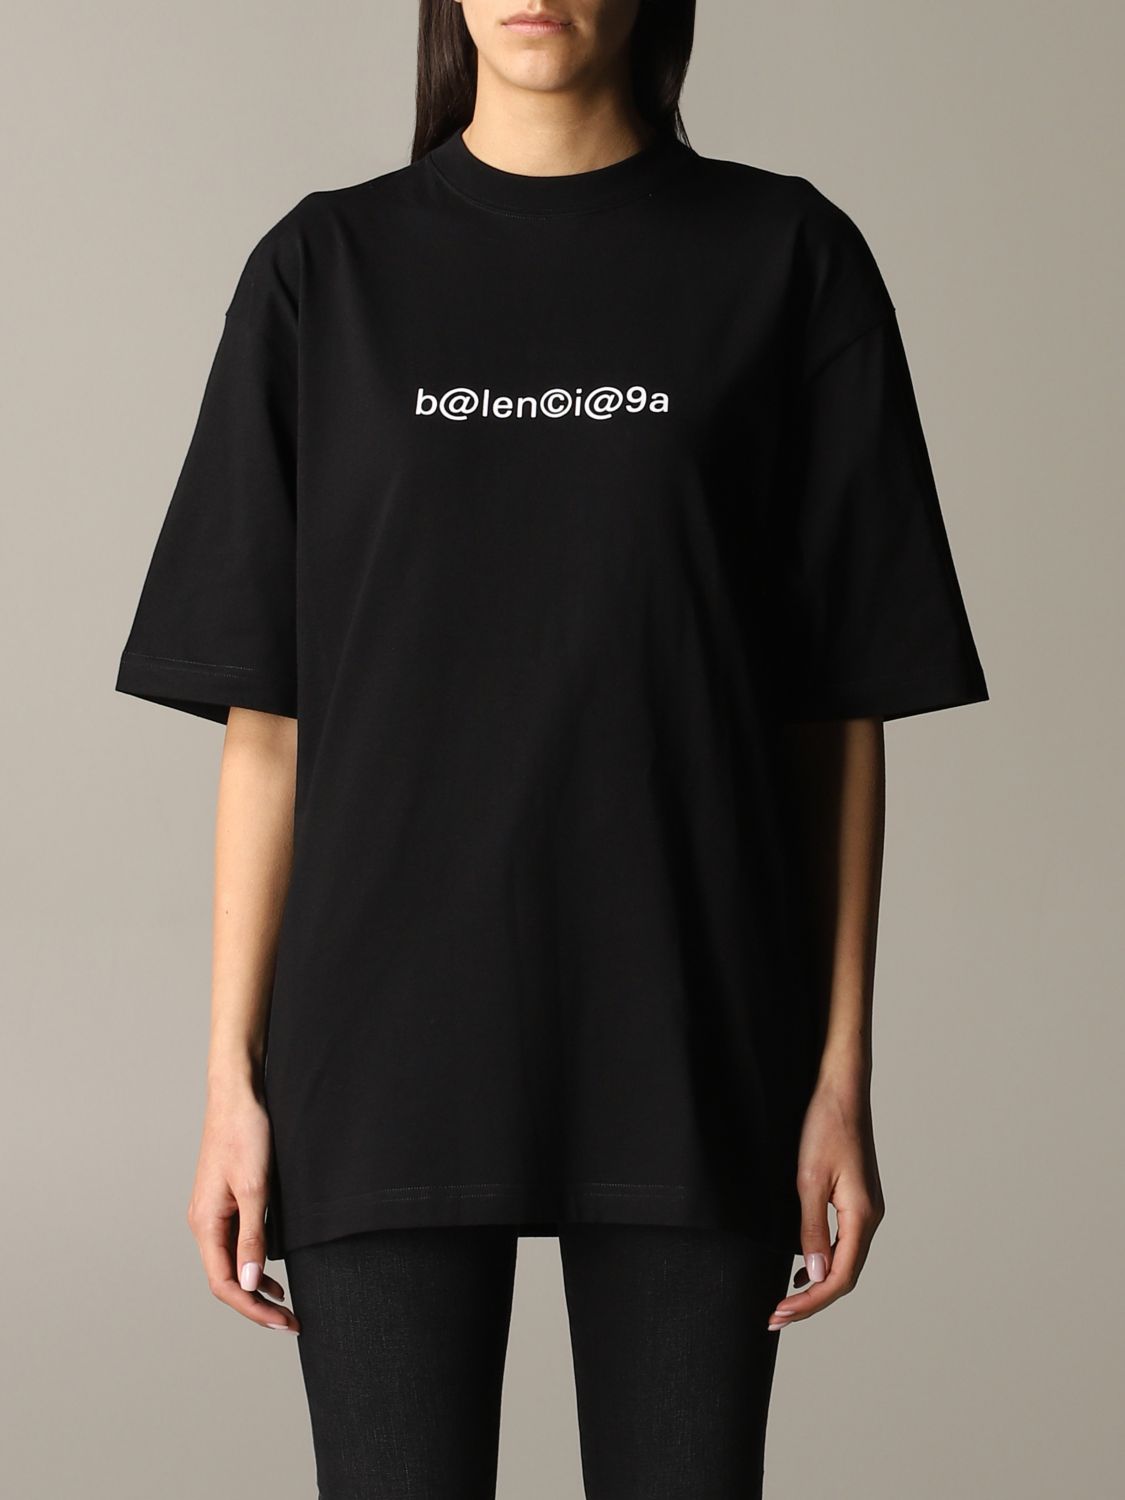 BALENCIAGA: oversized T-shirt with logo - Black | Balenciaga t-shirt ...